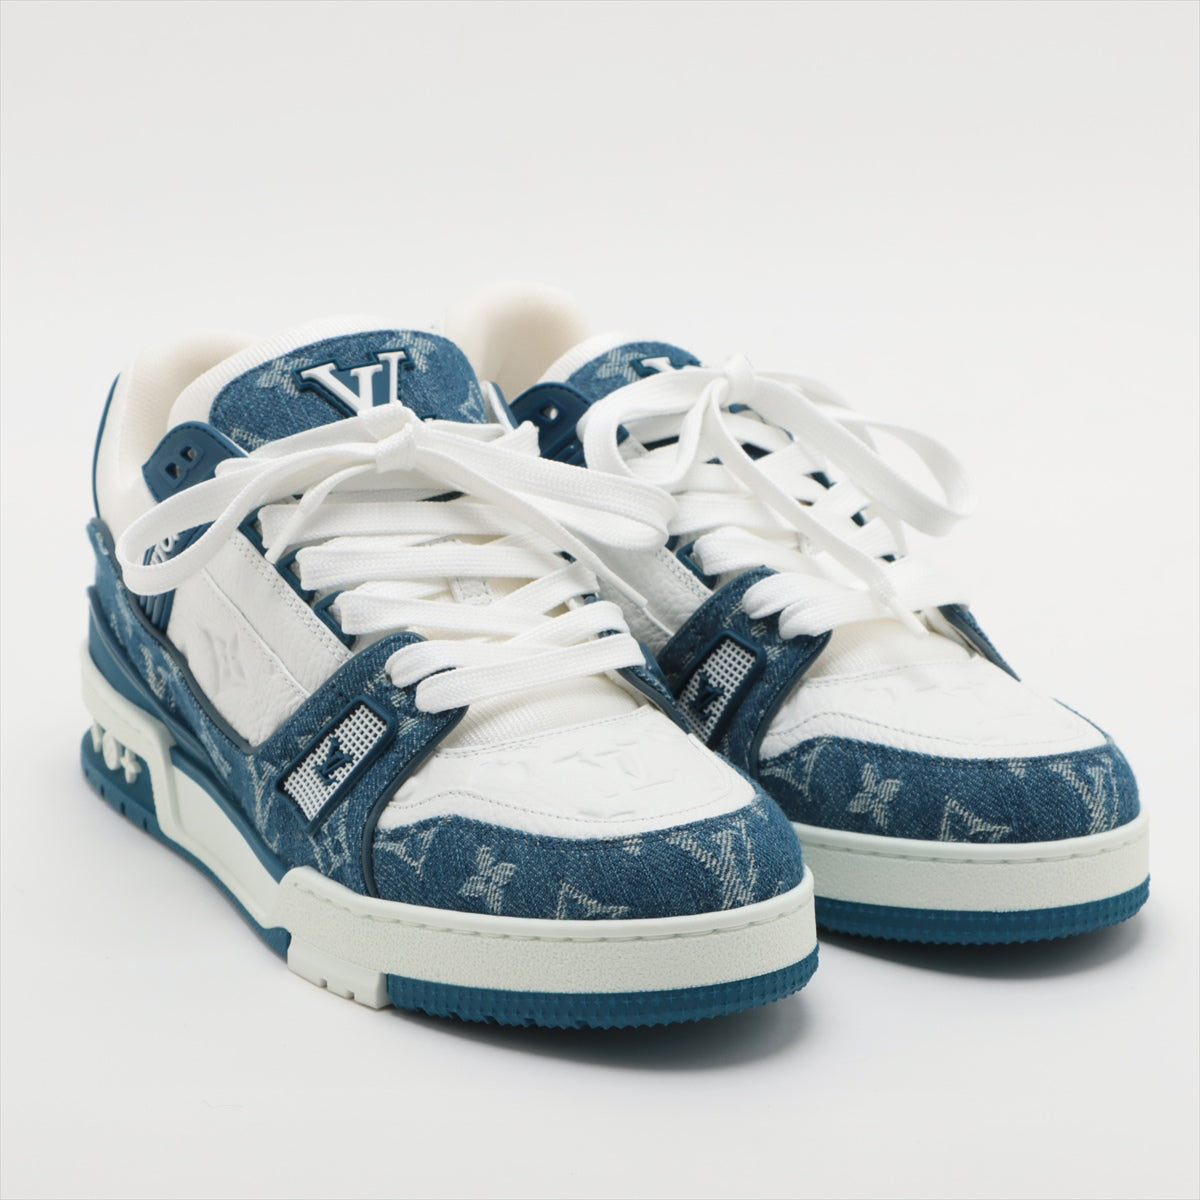 Louis Vuitton LV Trainer Line 23 years Denim & leather Sneakers 7 1/2 Men's Blue x white BM0213 Monogram denim